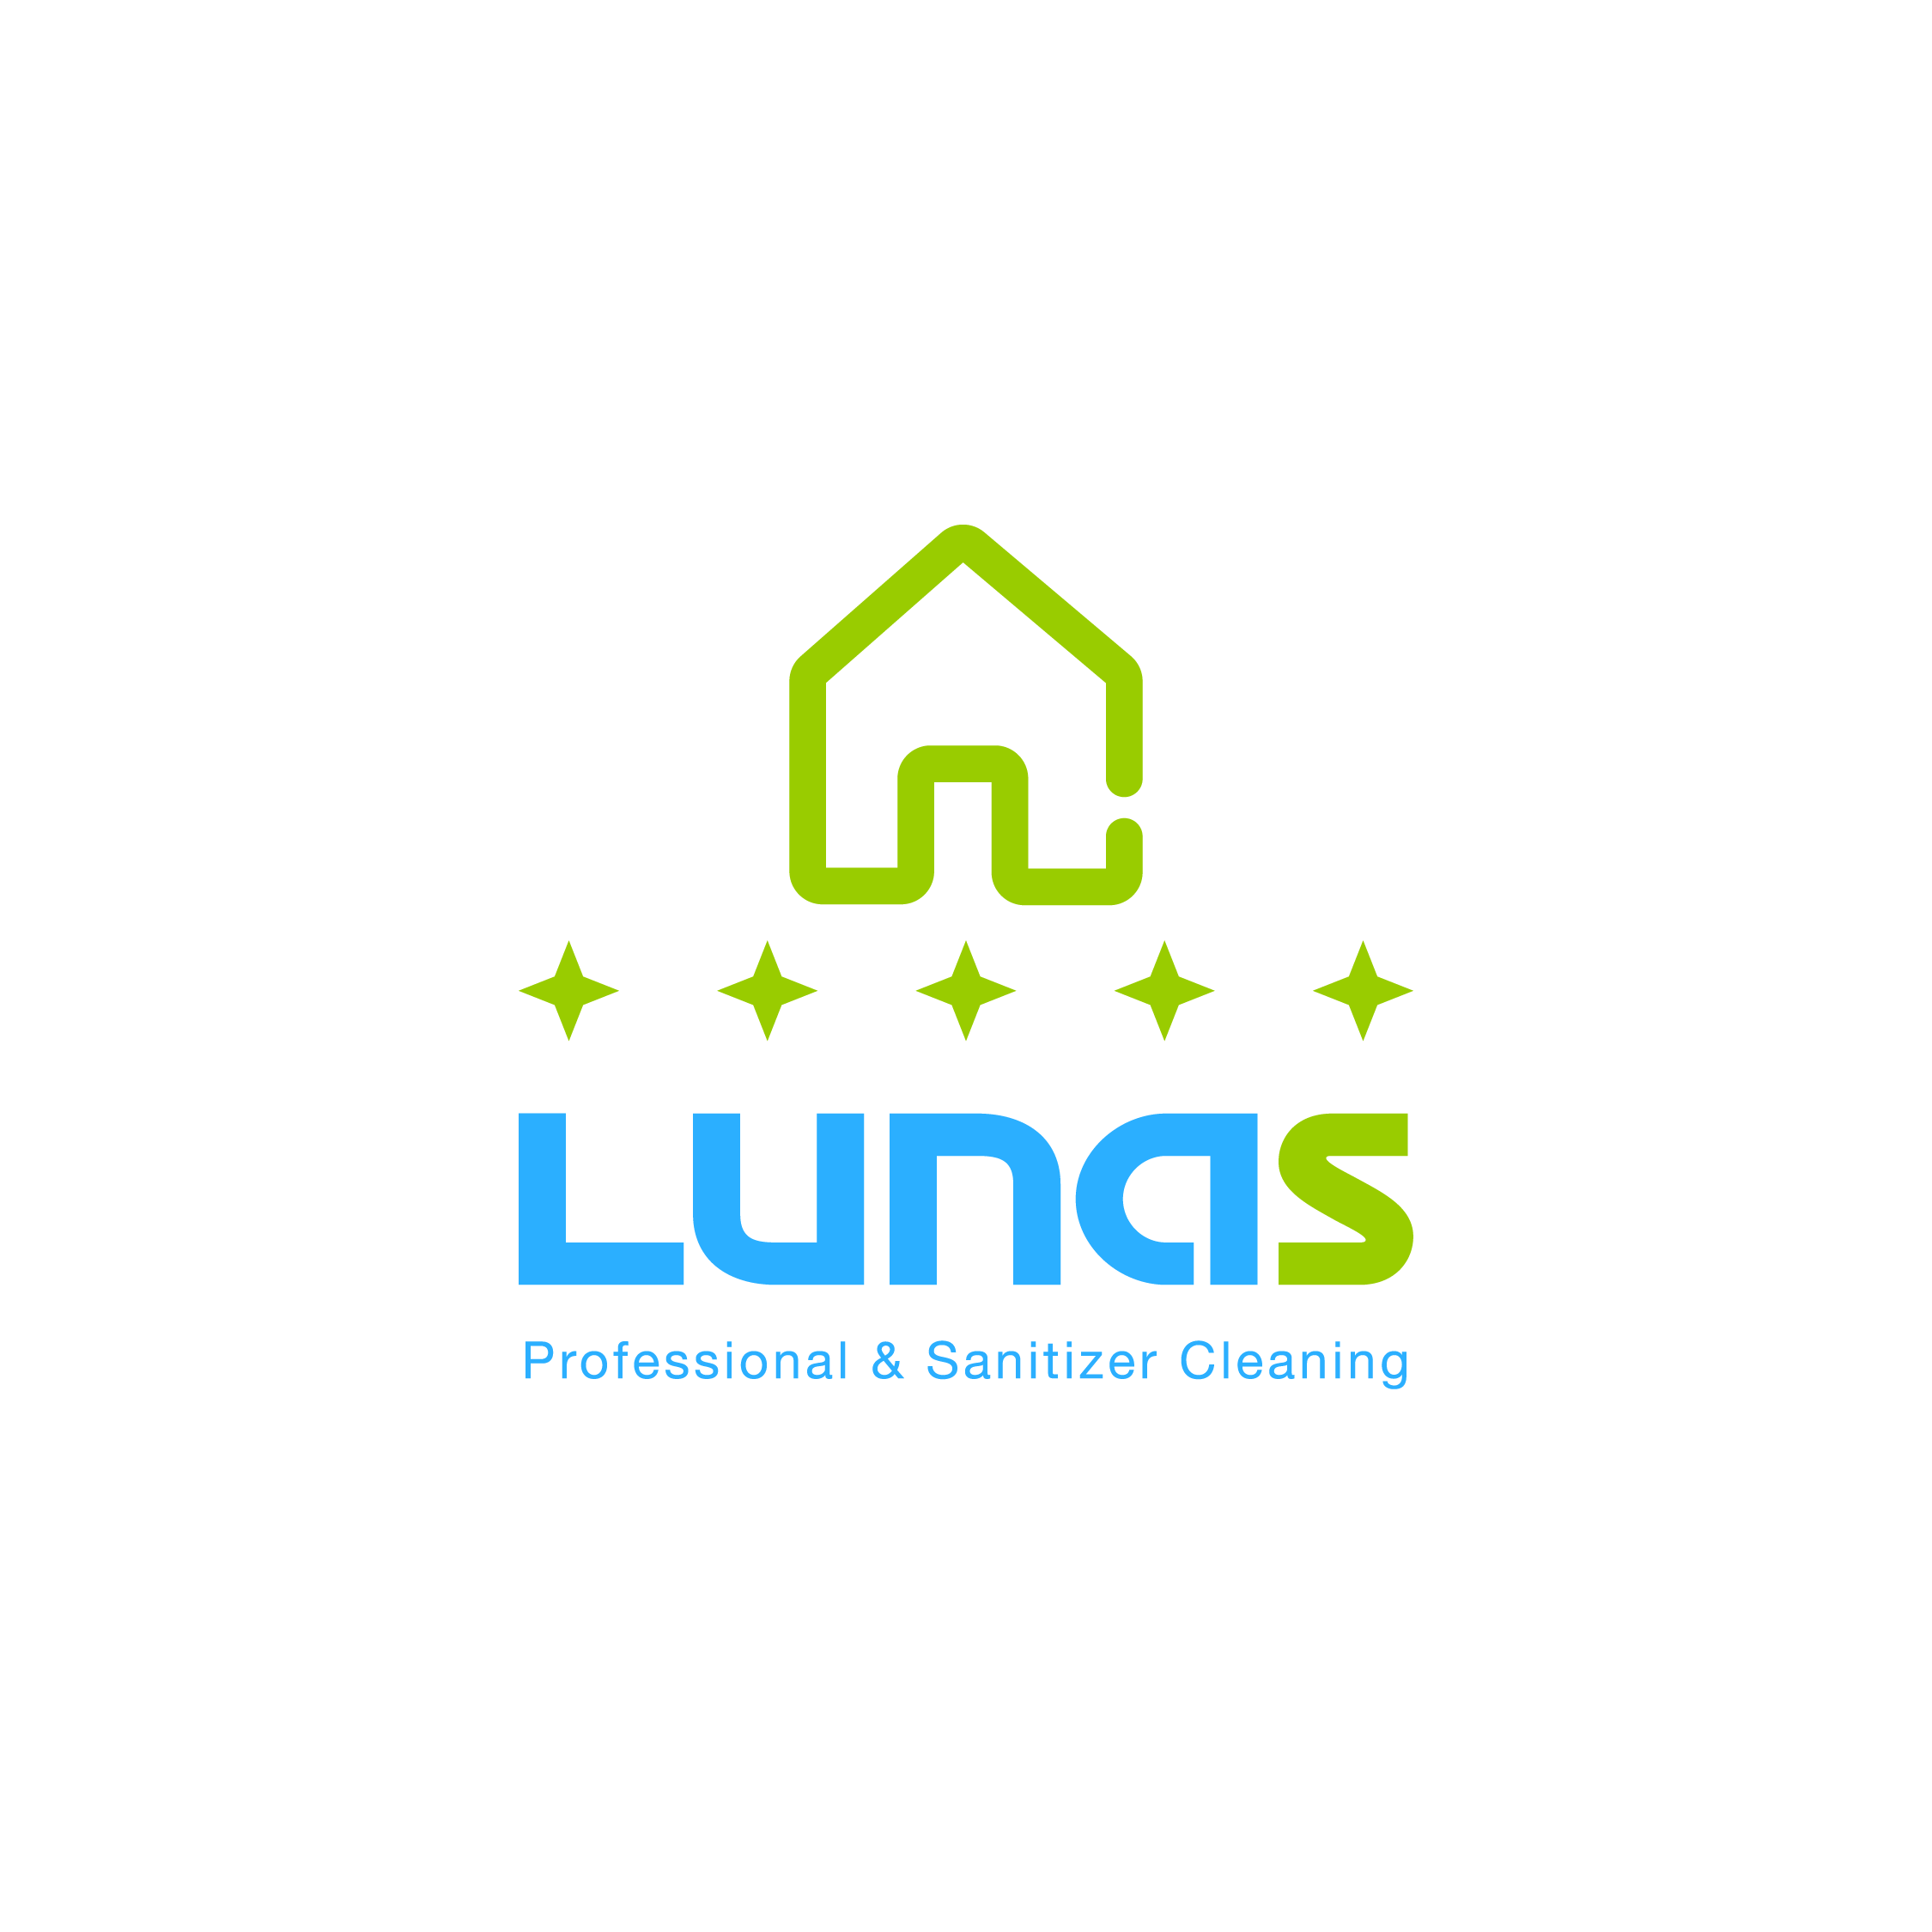 Luna Professional Sanitizer Cleaning Logo